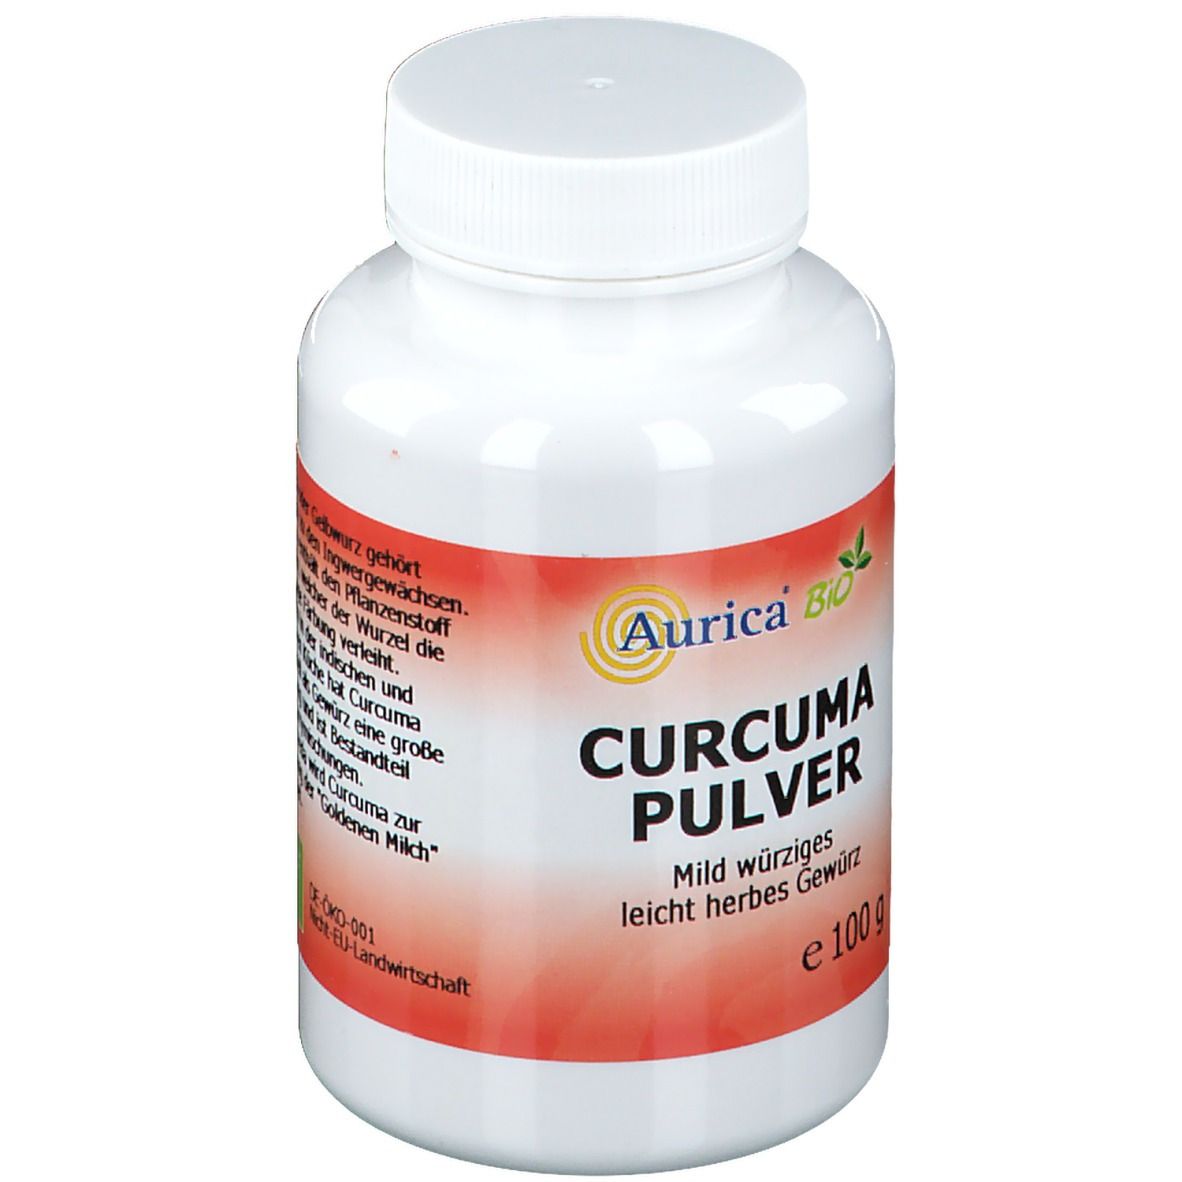 Aurica® Bio Curcuma Pulver